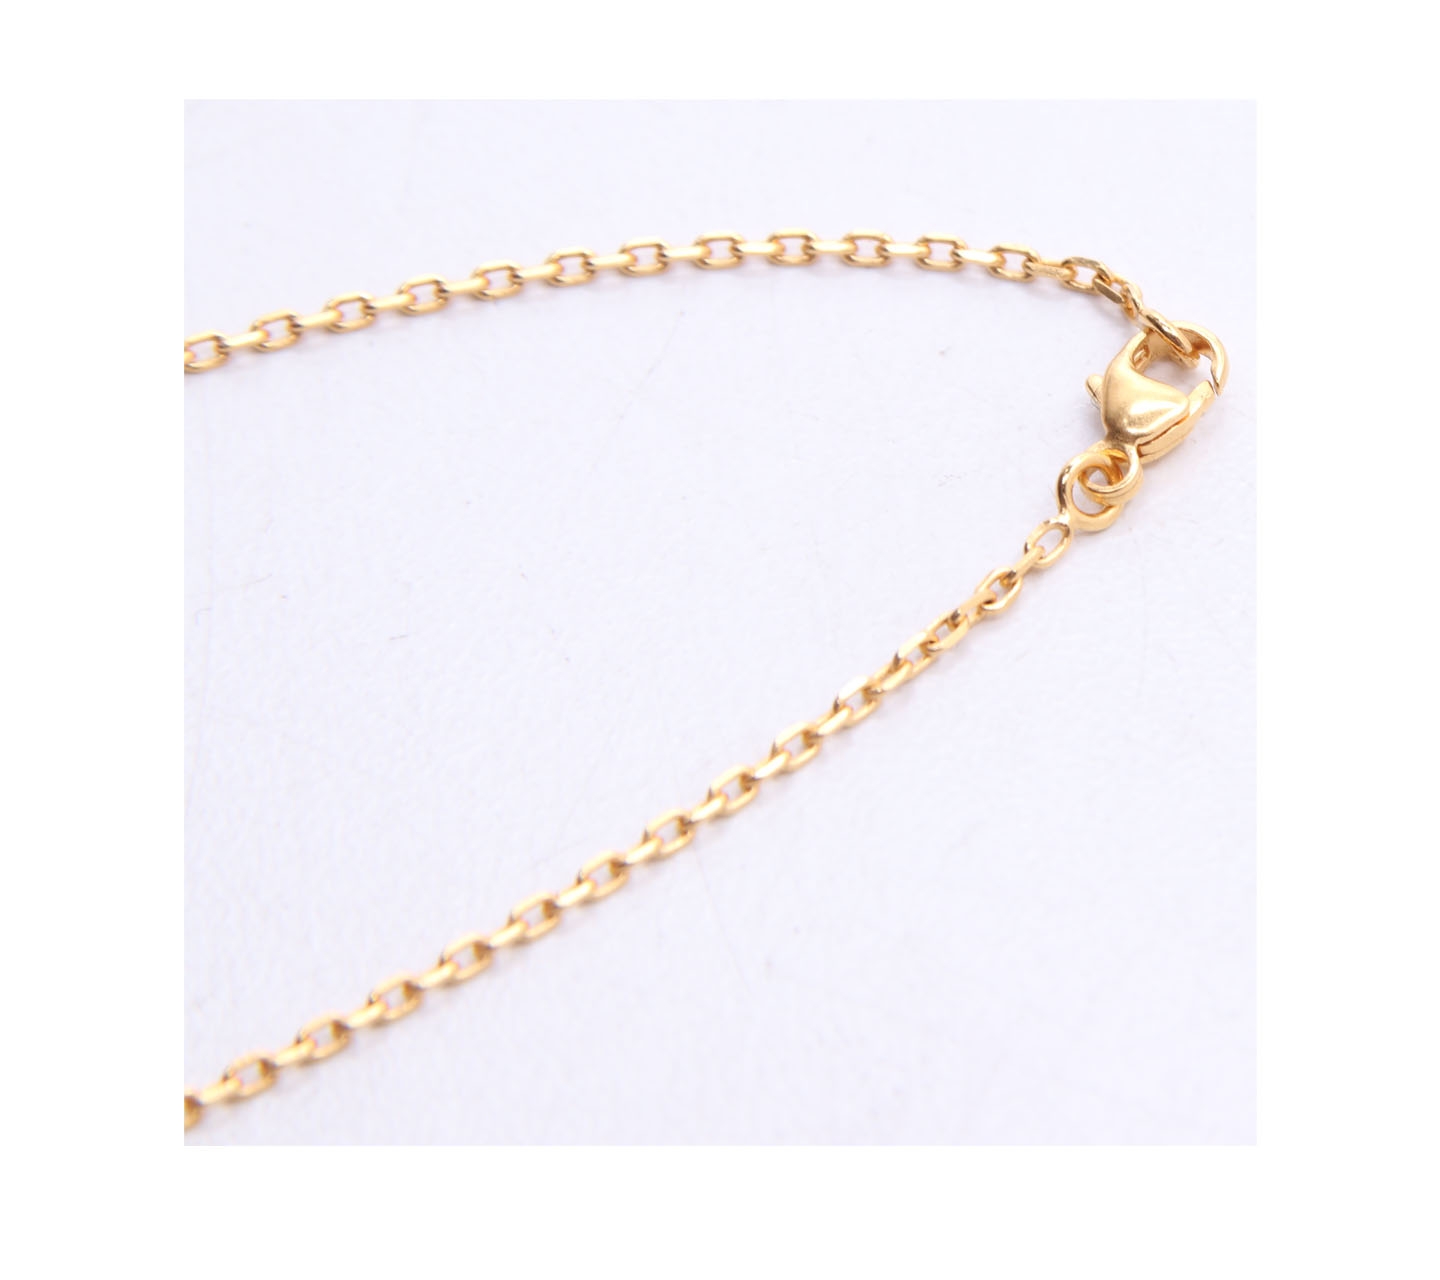 Hermes Gold Cadenas Padlock Motif Pendant Necklace Jewelry